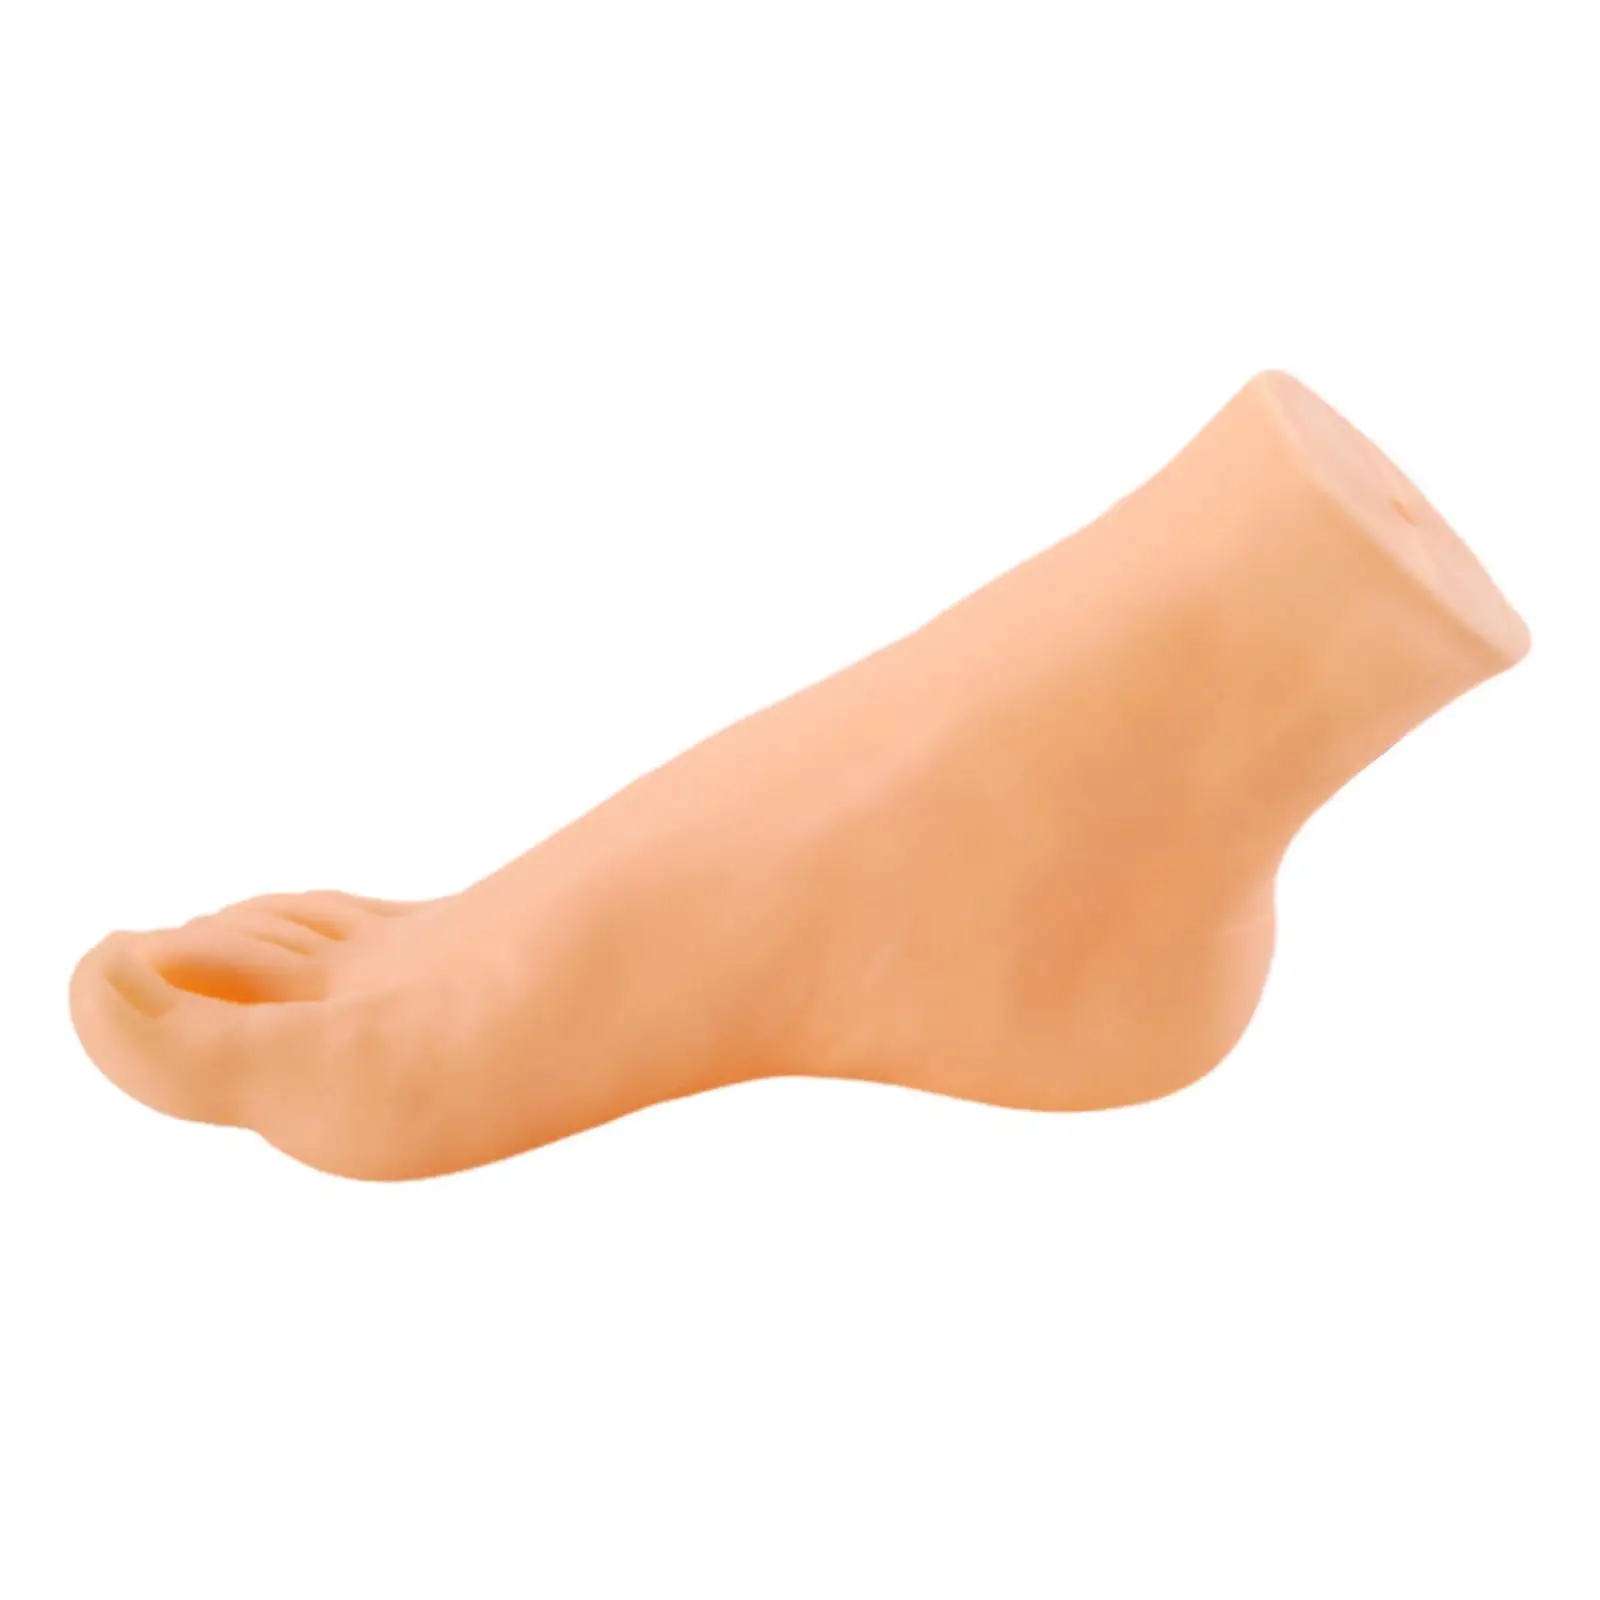 Mannequin Foot Display Durable Sock Display Prop Foot Model Stand Tools Simulation for Retail Shop Socks Ankle Bracelet